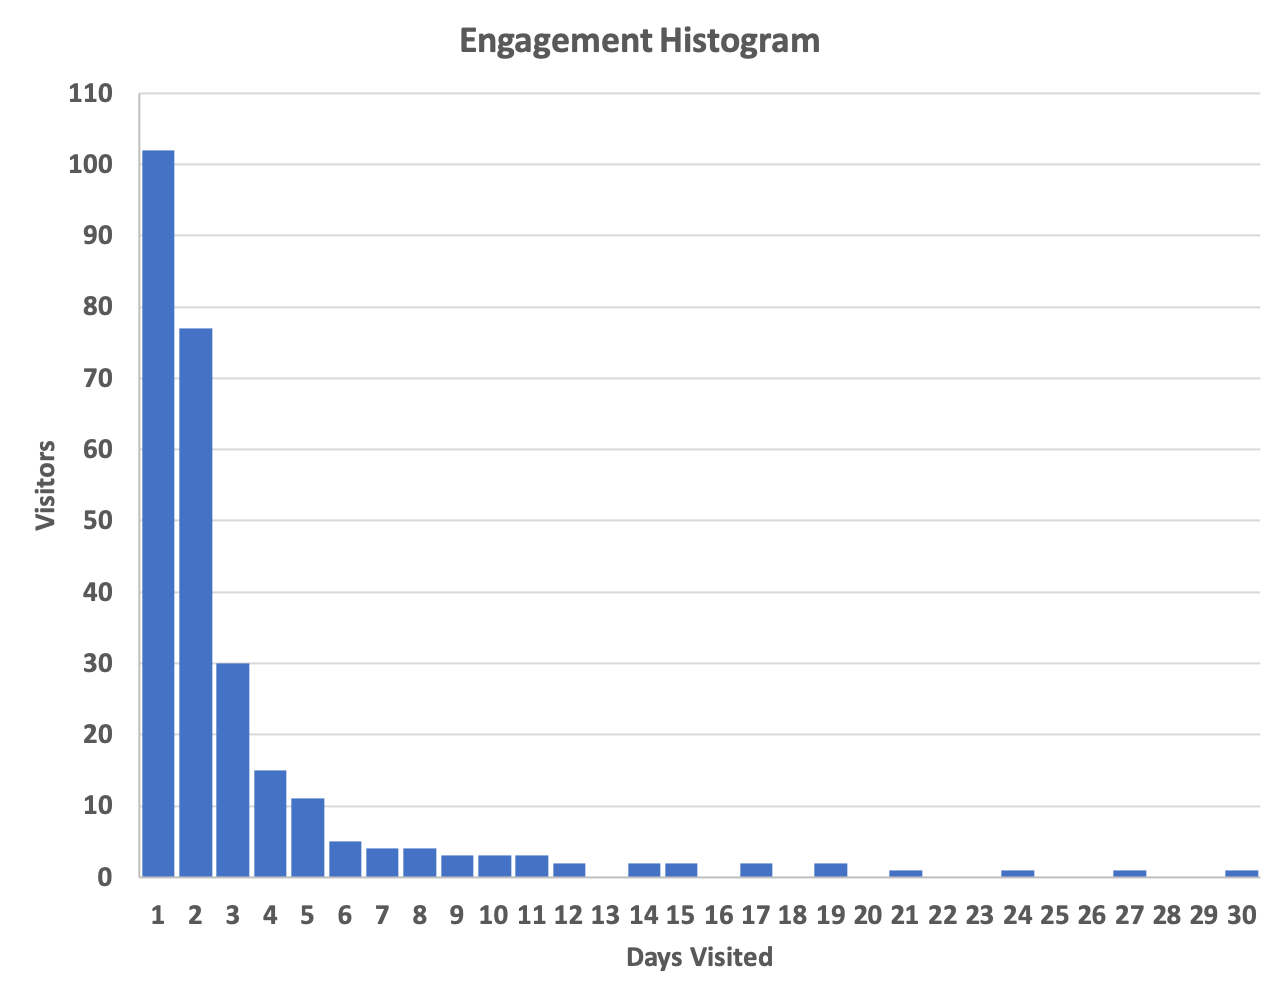 EngagementHistogram.png